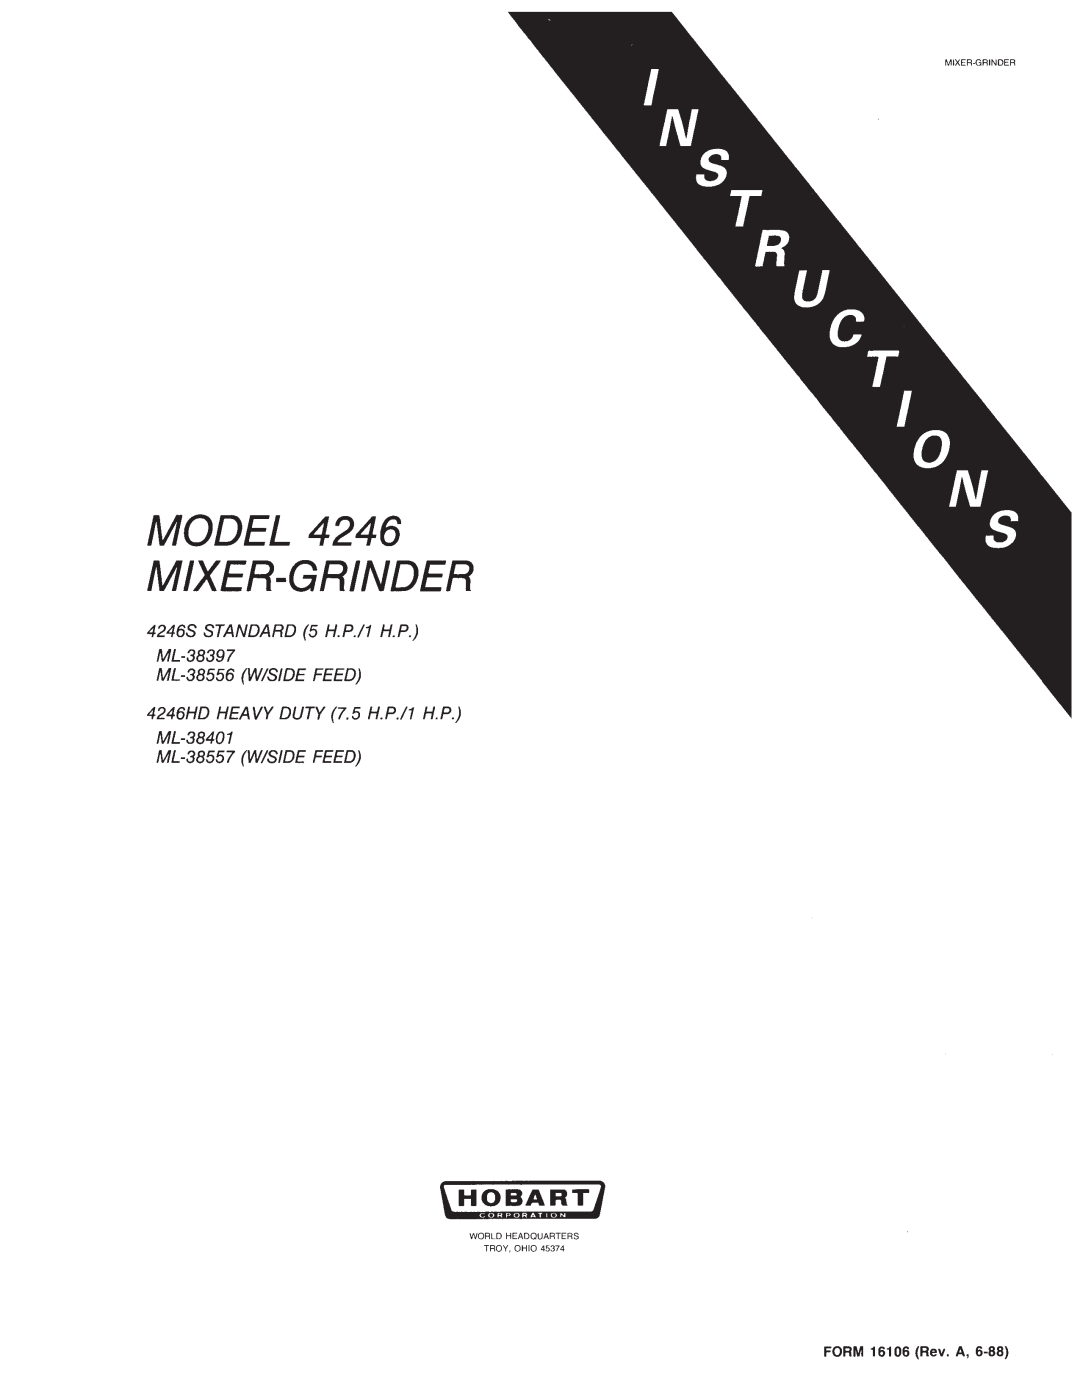 Hobart manual Model Mixer-Grinder, 4246S STANDARD 5 HP/1 HP ML-134216, 4246HD HEAVY DUTY 7.5 HP/1 HP ML-134214 